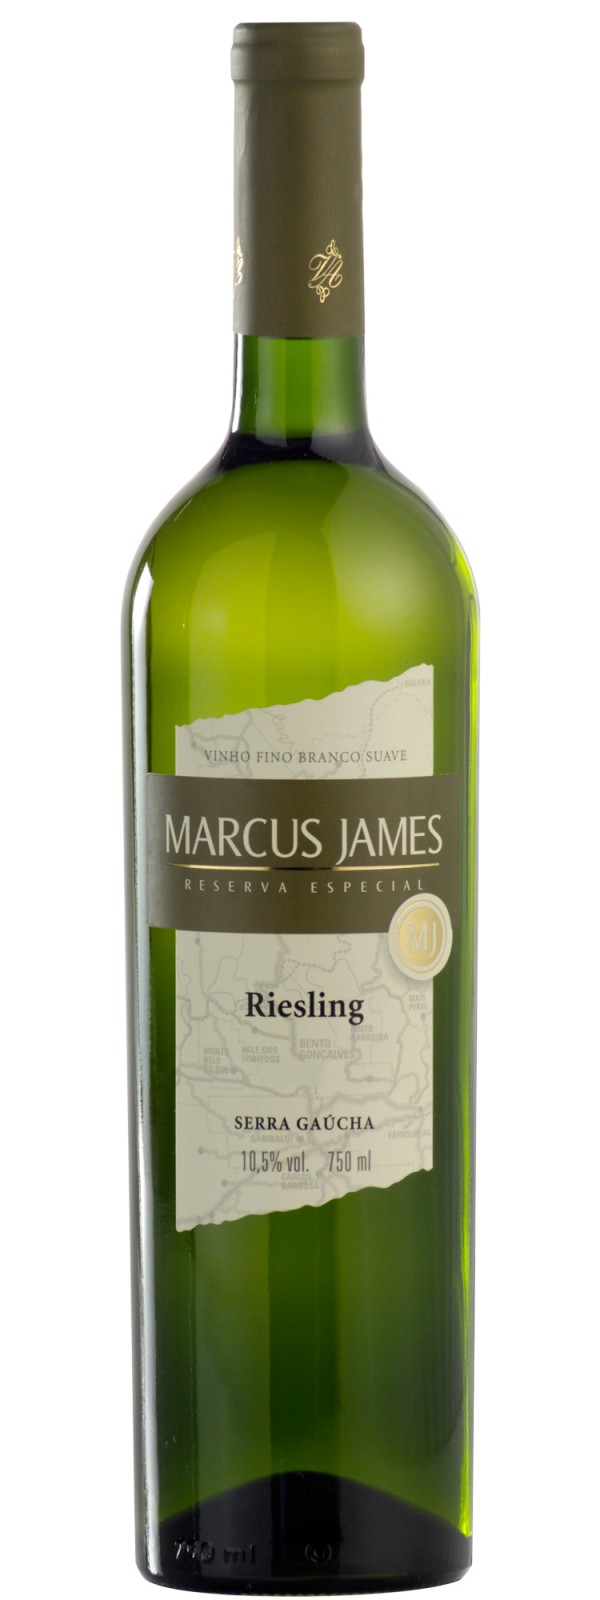 Vinho Marcus James branco riesling 750 ml